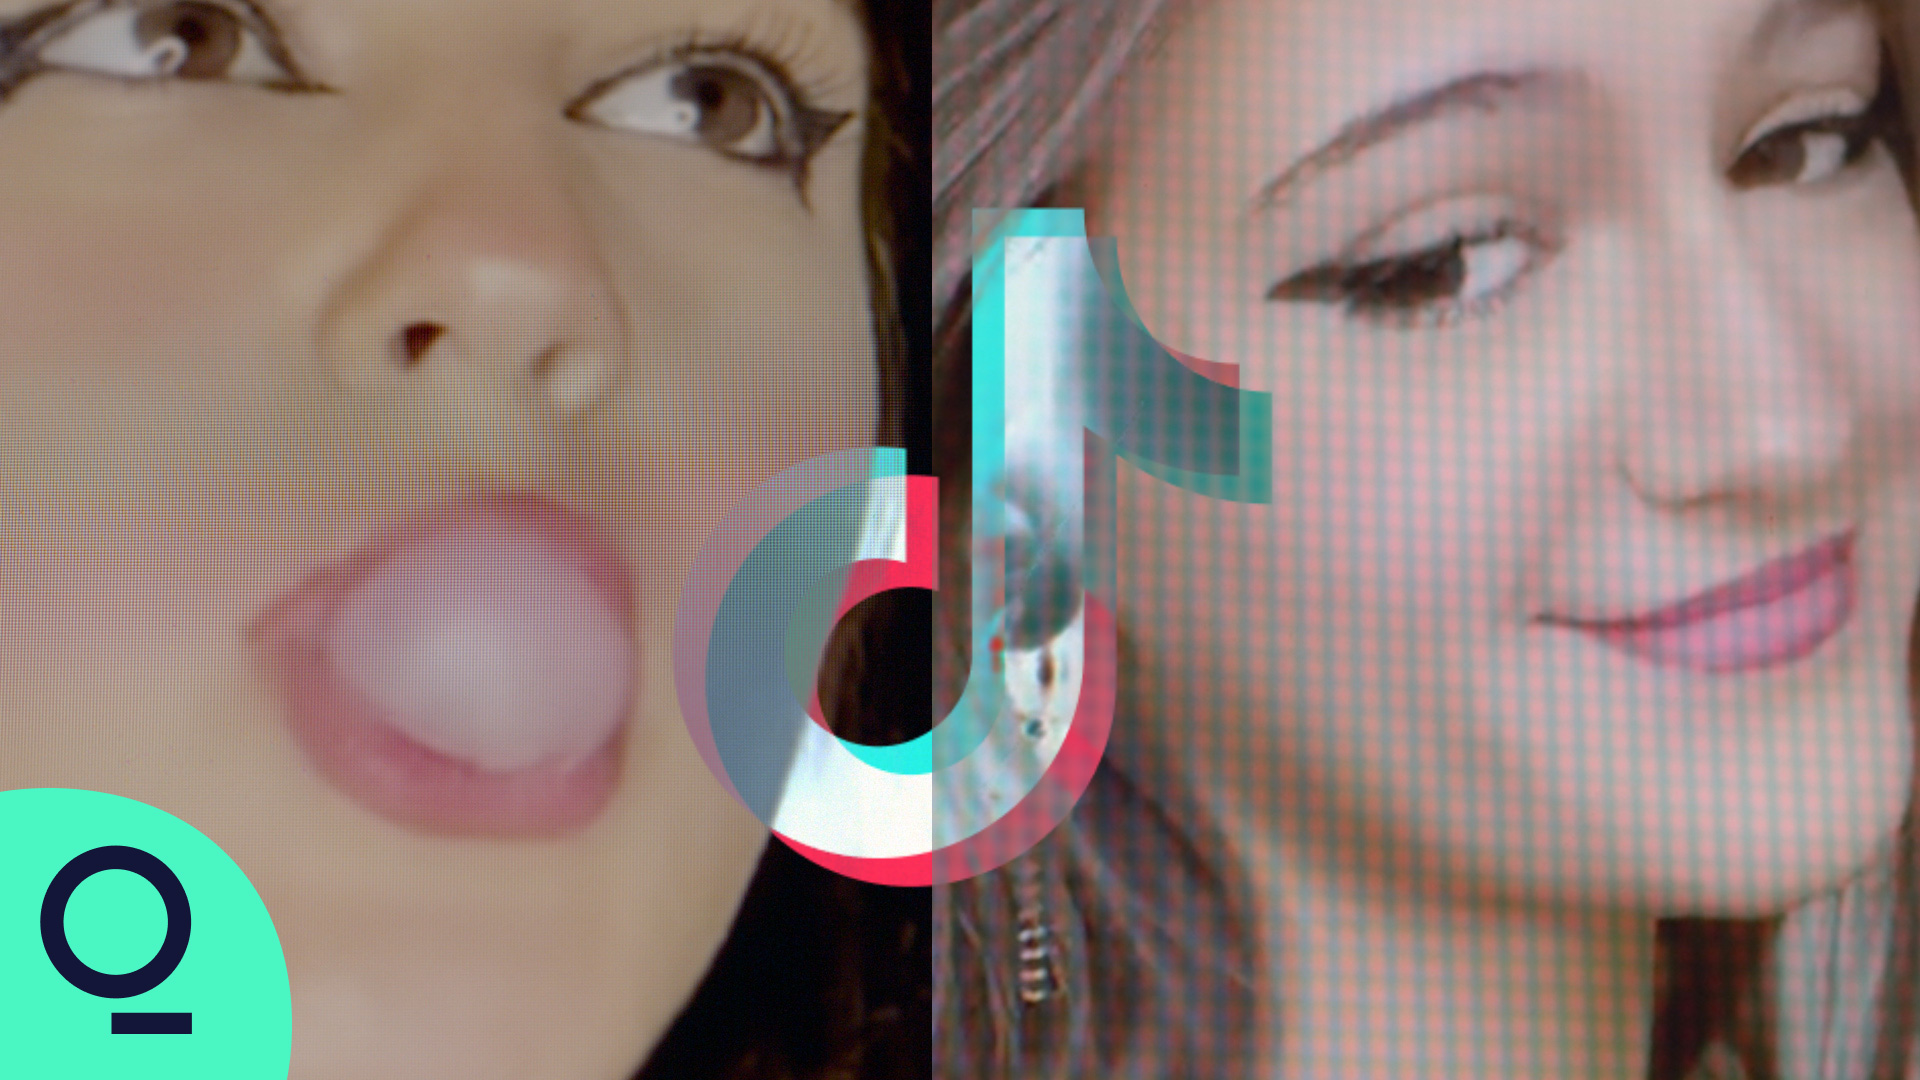 Hot Teen Girl Ki Chudai Hd - Video: The Hypersexualization of TikTok's Teen Users - Bloomberg